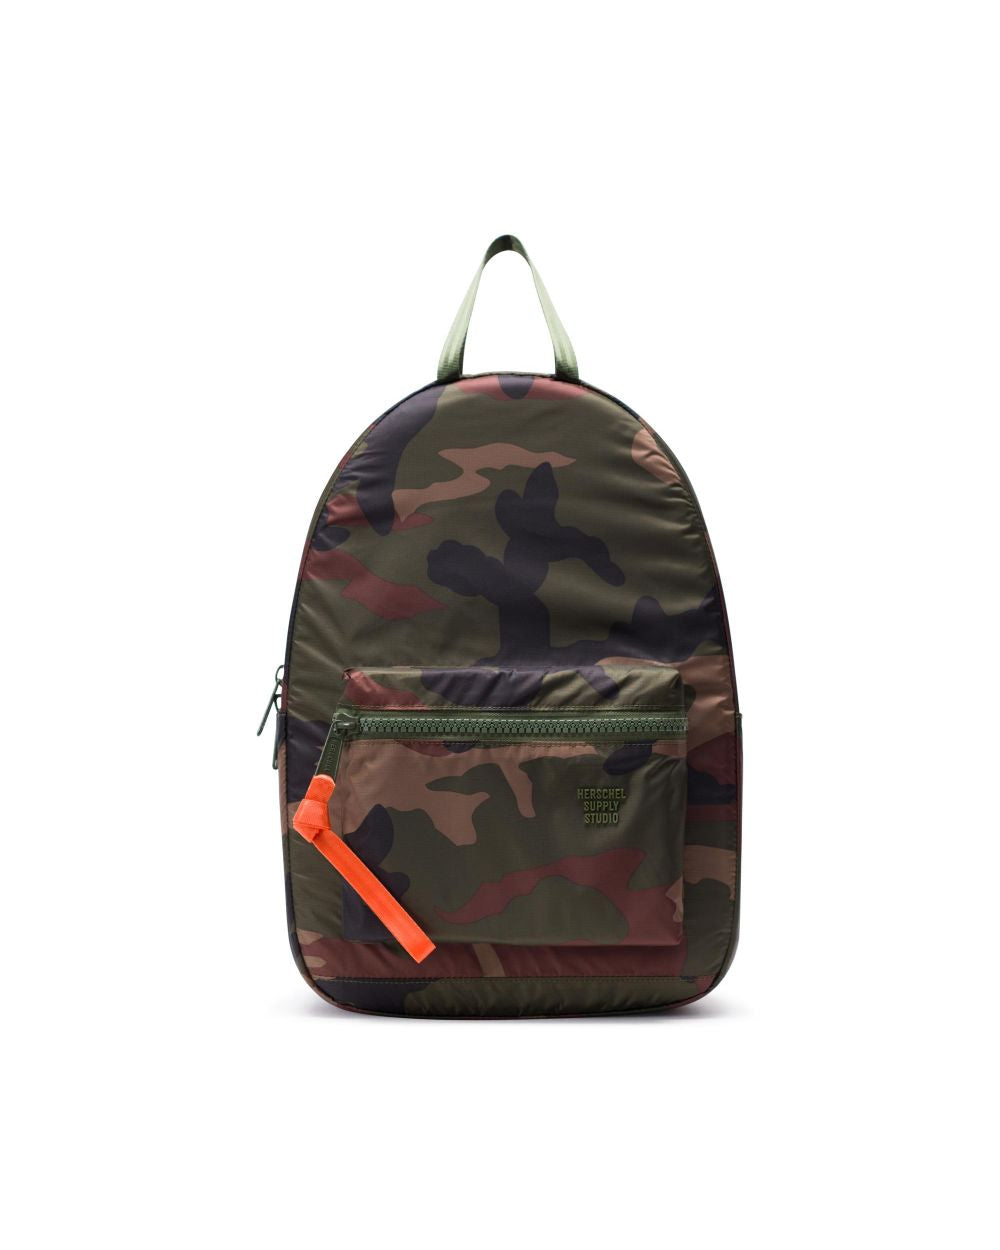 HS6 Backpack | Studio